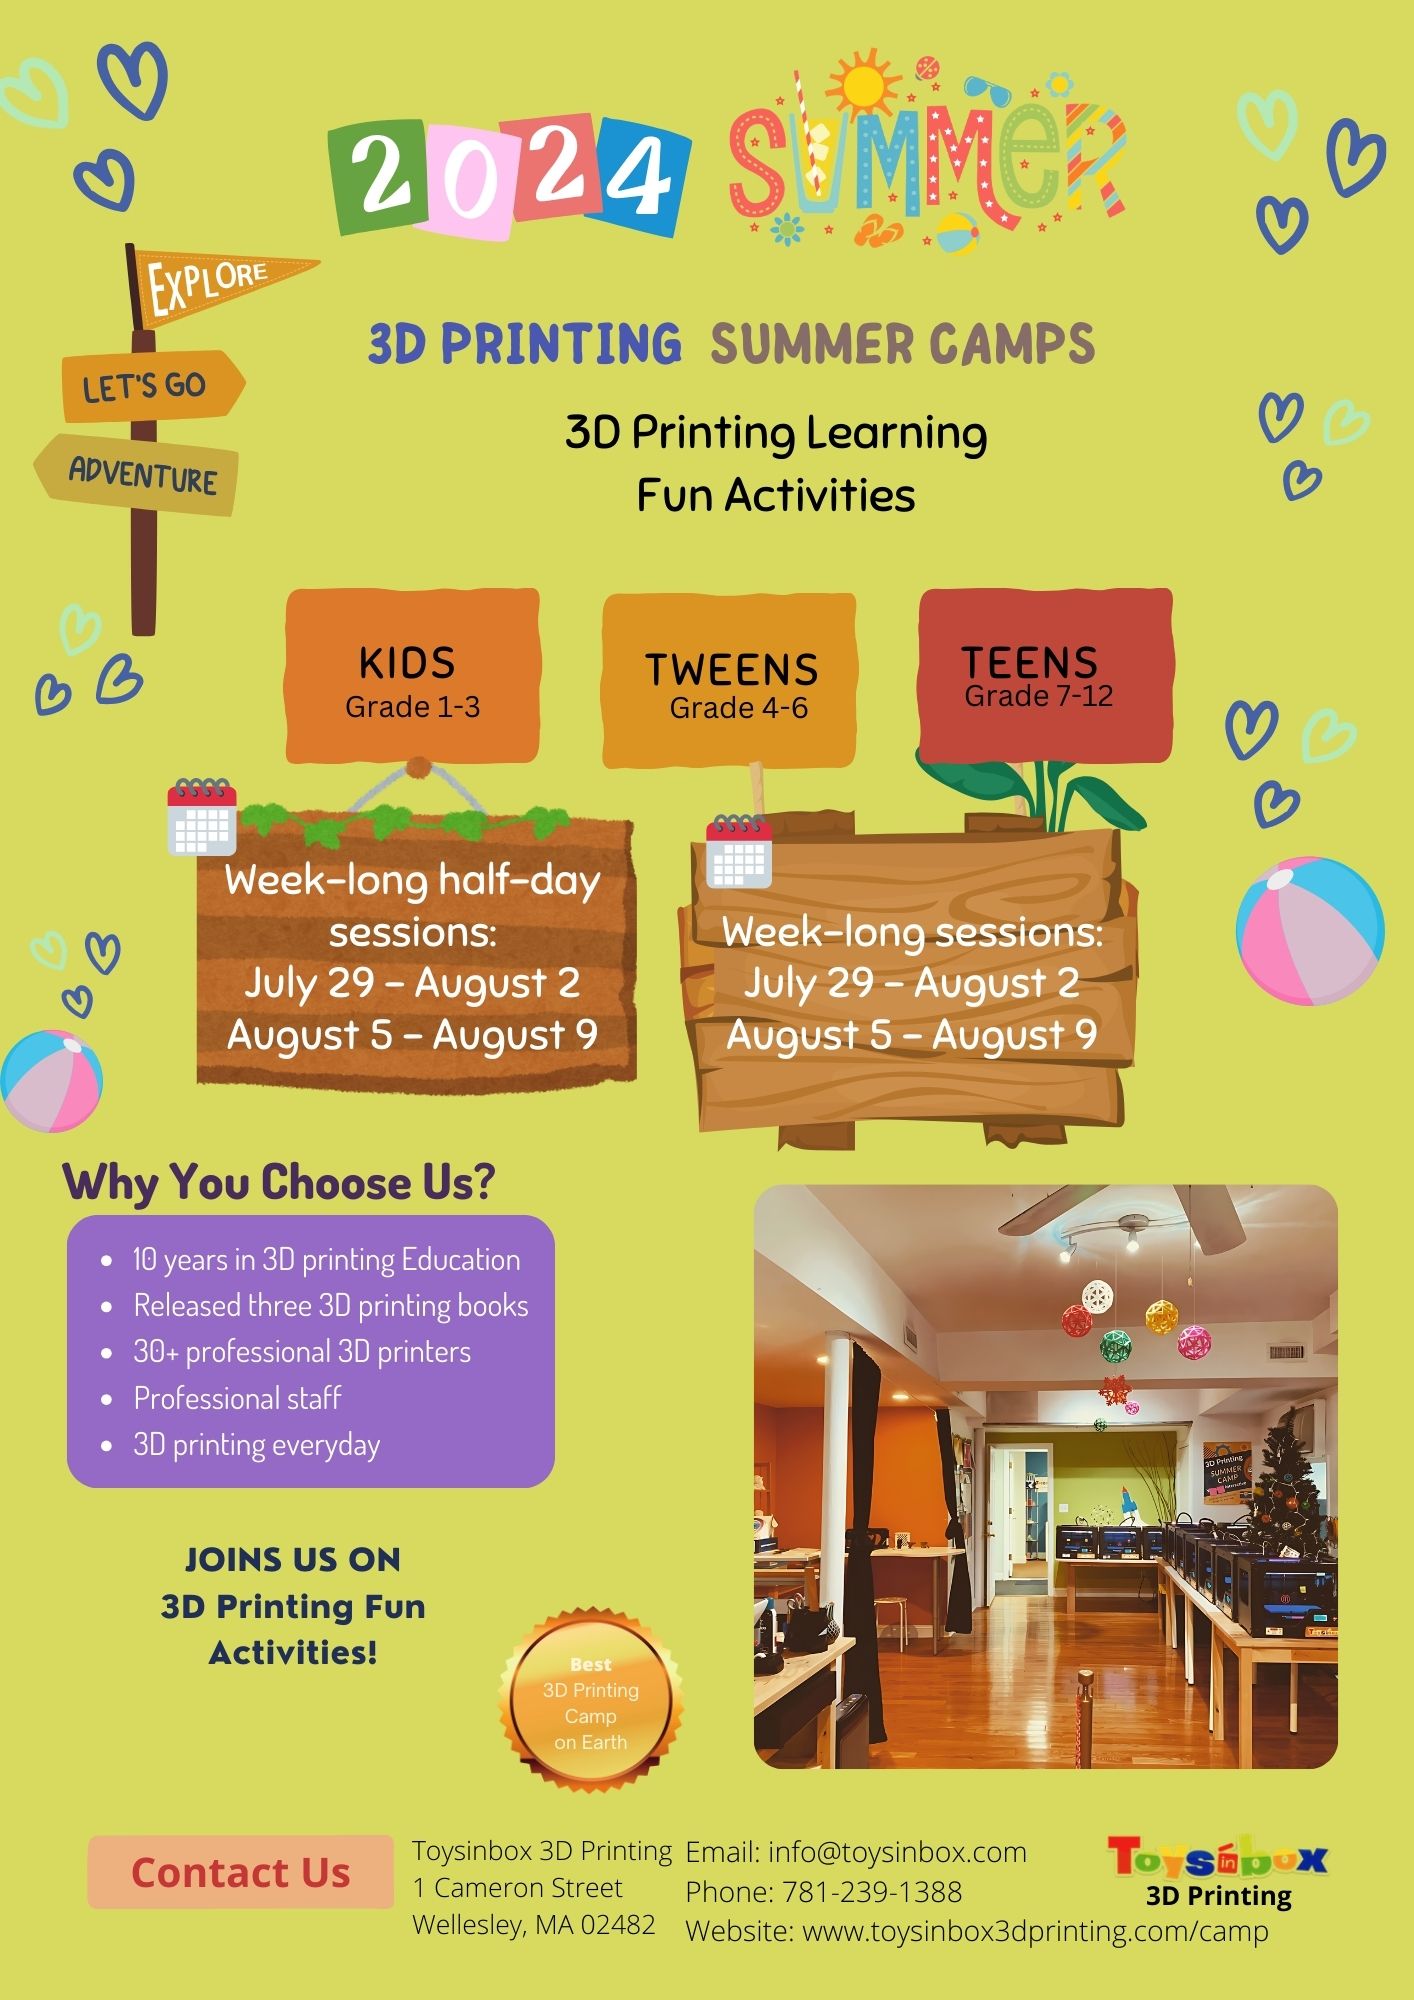 Toysinbox 3D Printing Summer Programs 2024: Summer Camps, Summer Classes, Summer Tour, Summer Professional Training